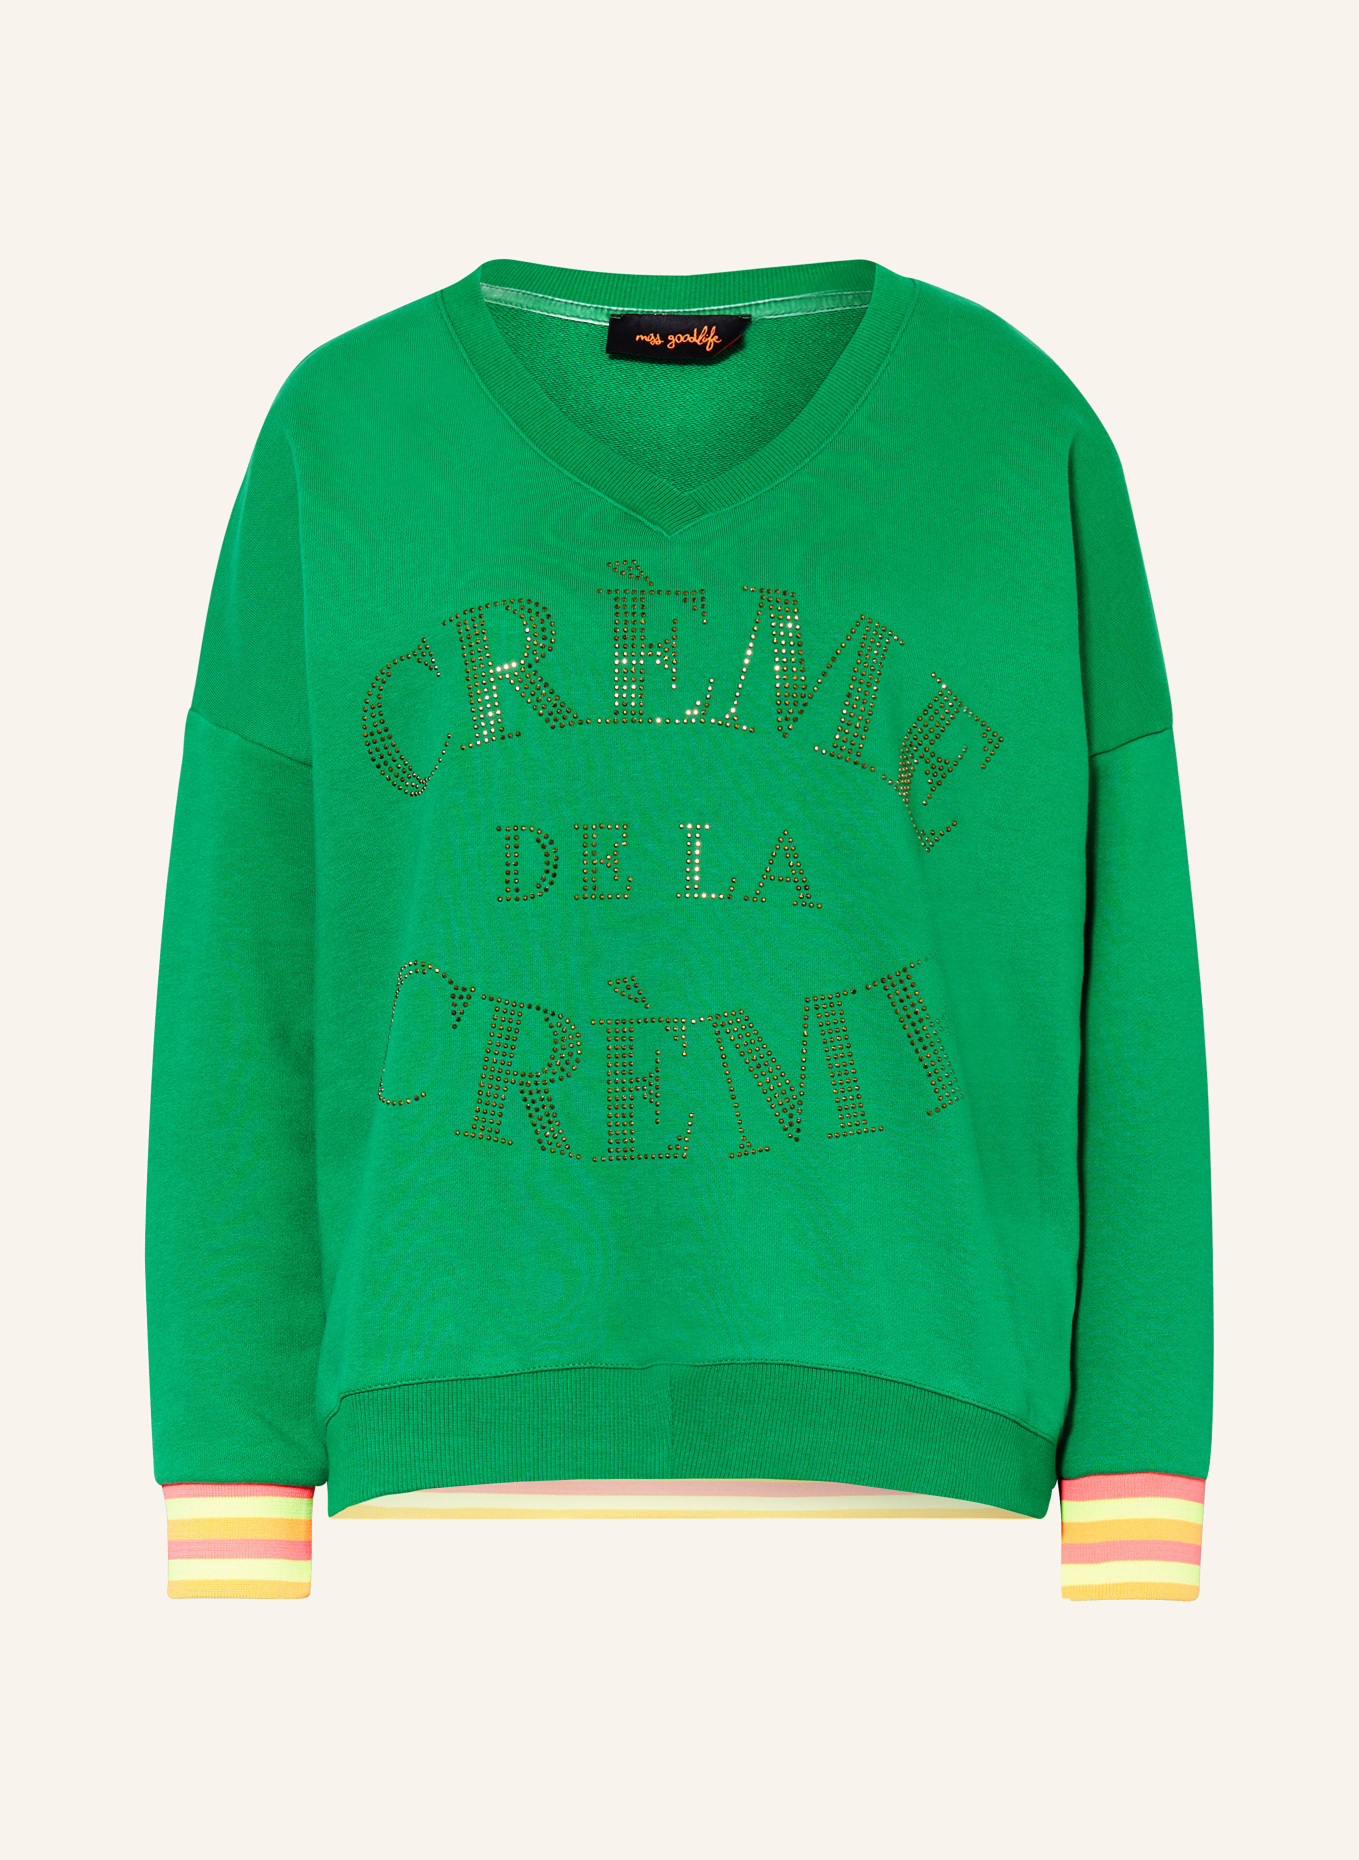 miss goodlife Sweatshirt with decorative gems, Color: GREEN/ NEON PINK/ NEON ORANGE (Image 1)